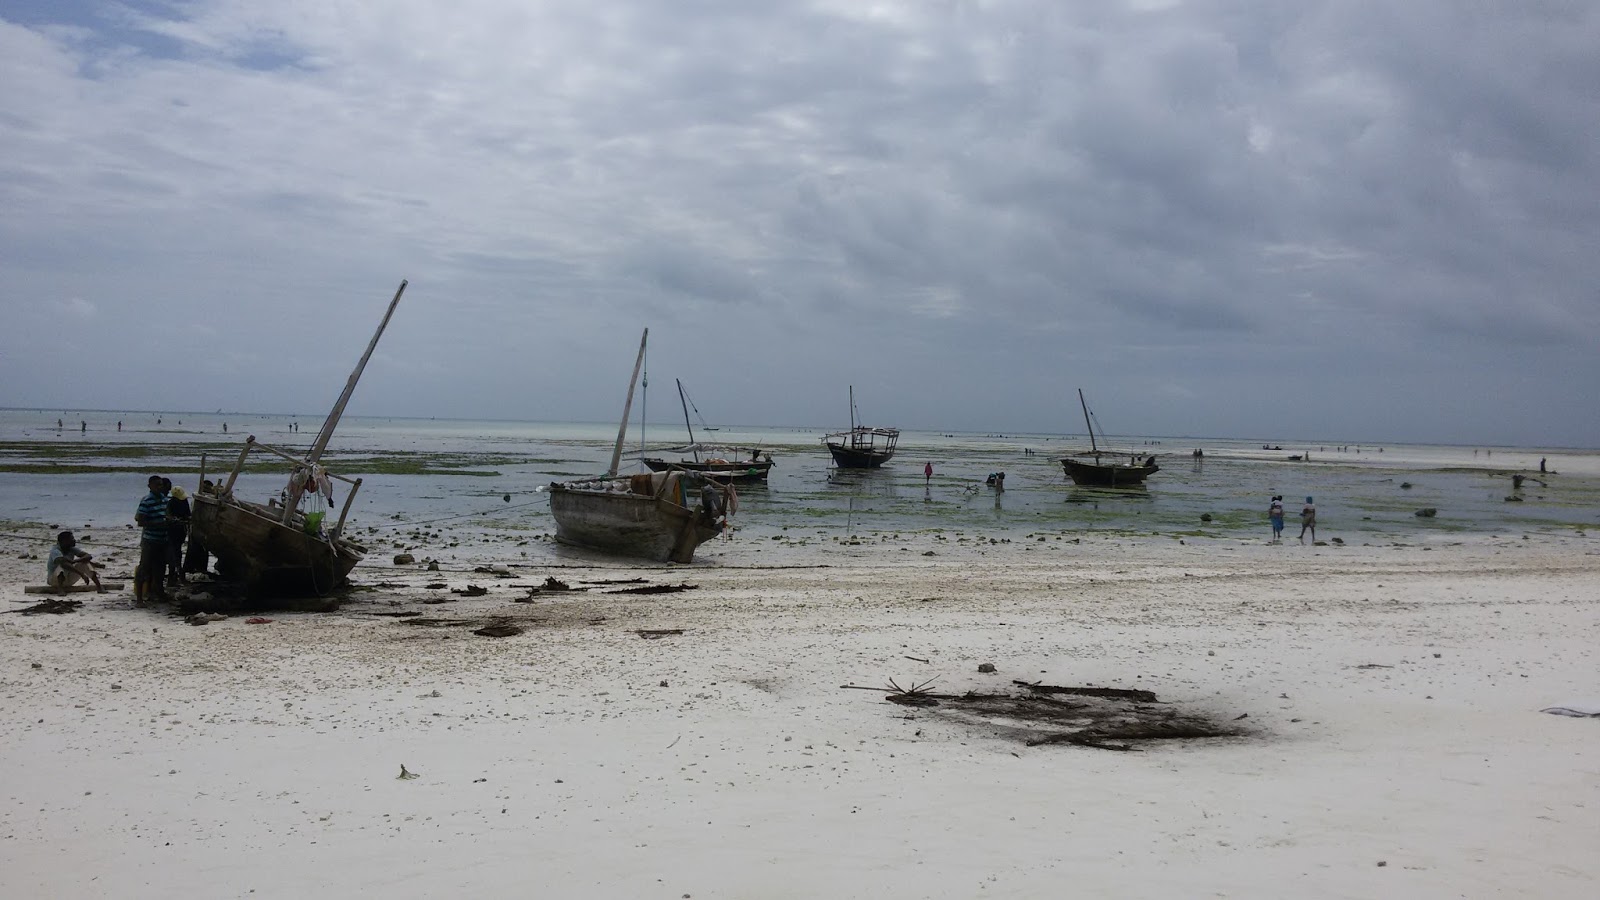 In Zanzibar. Paradise has Cracks. (Poem)